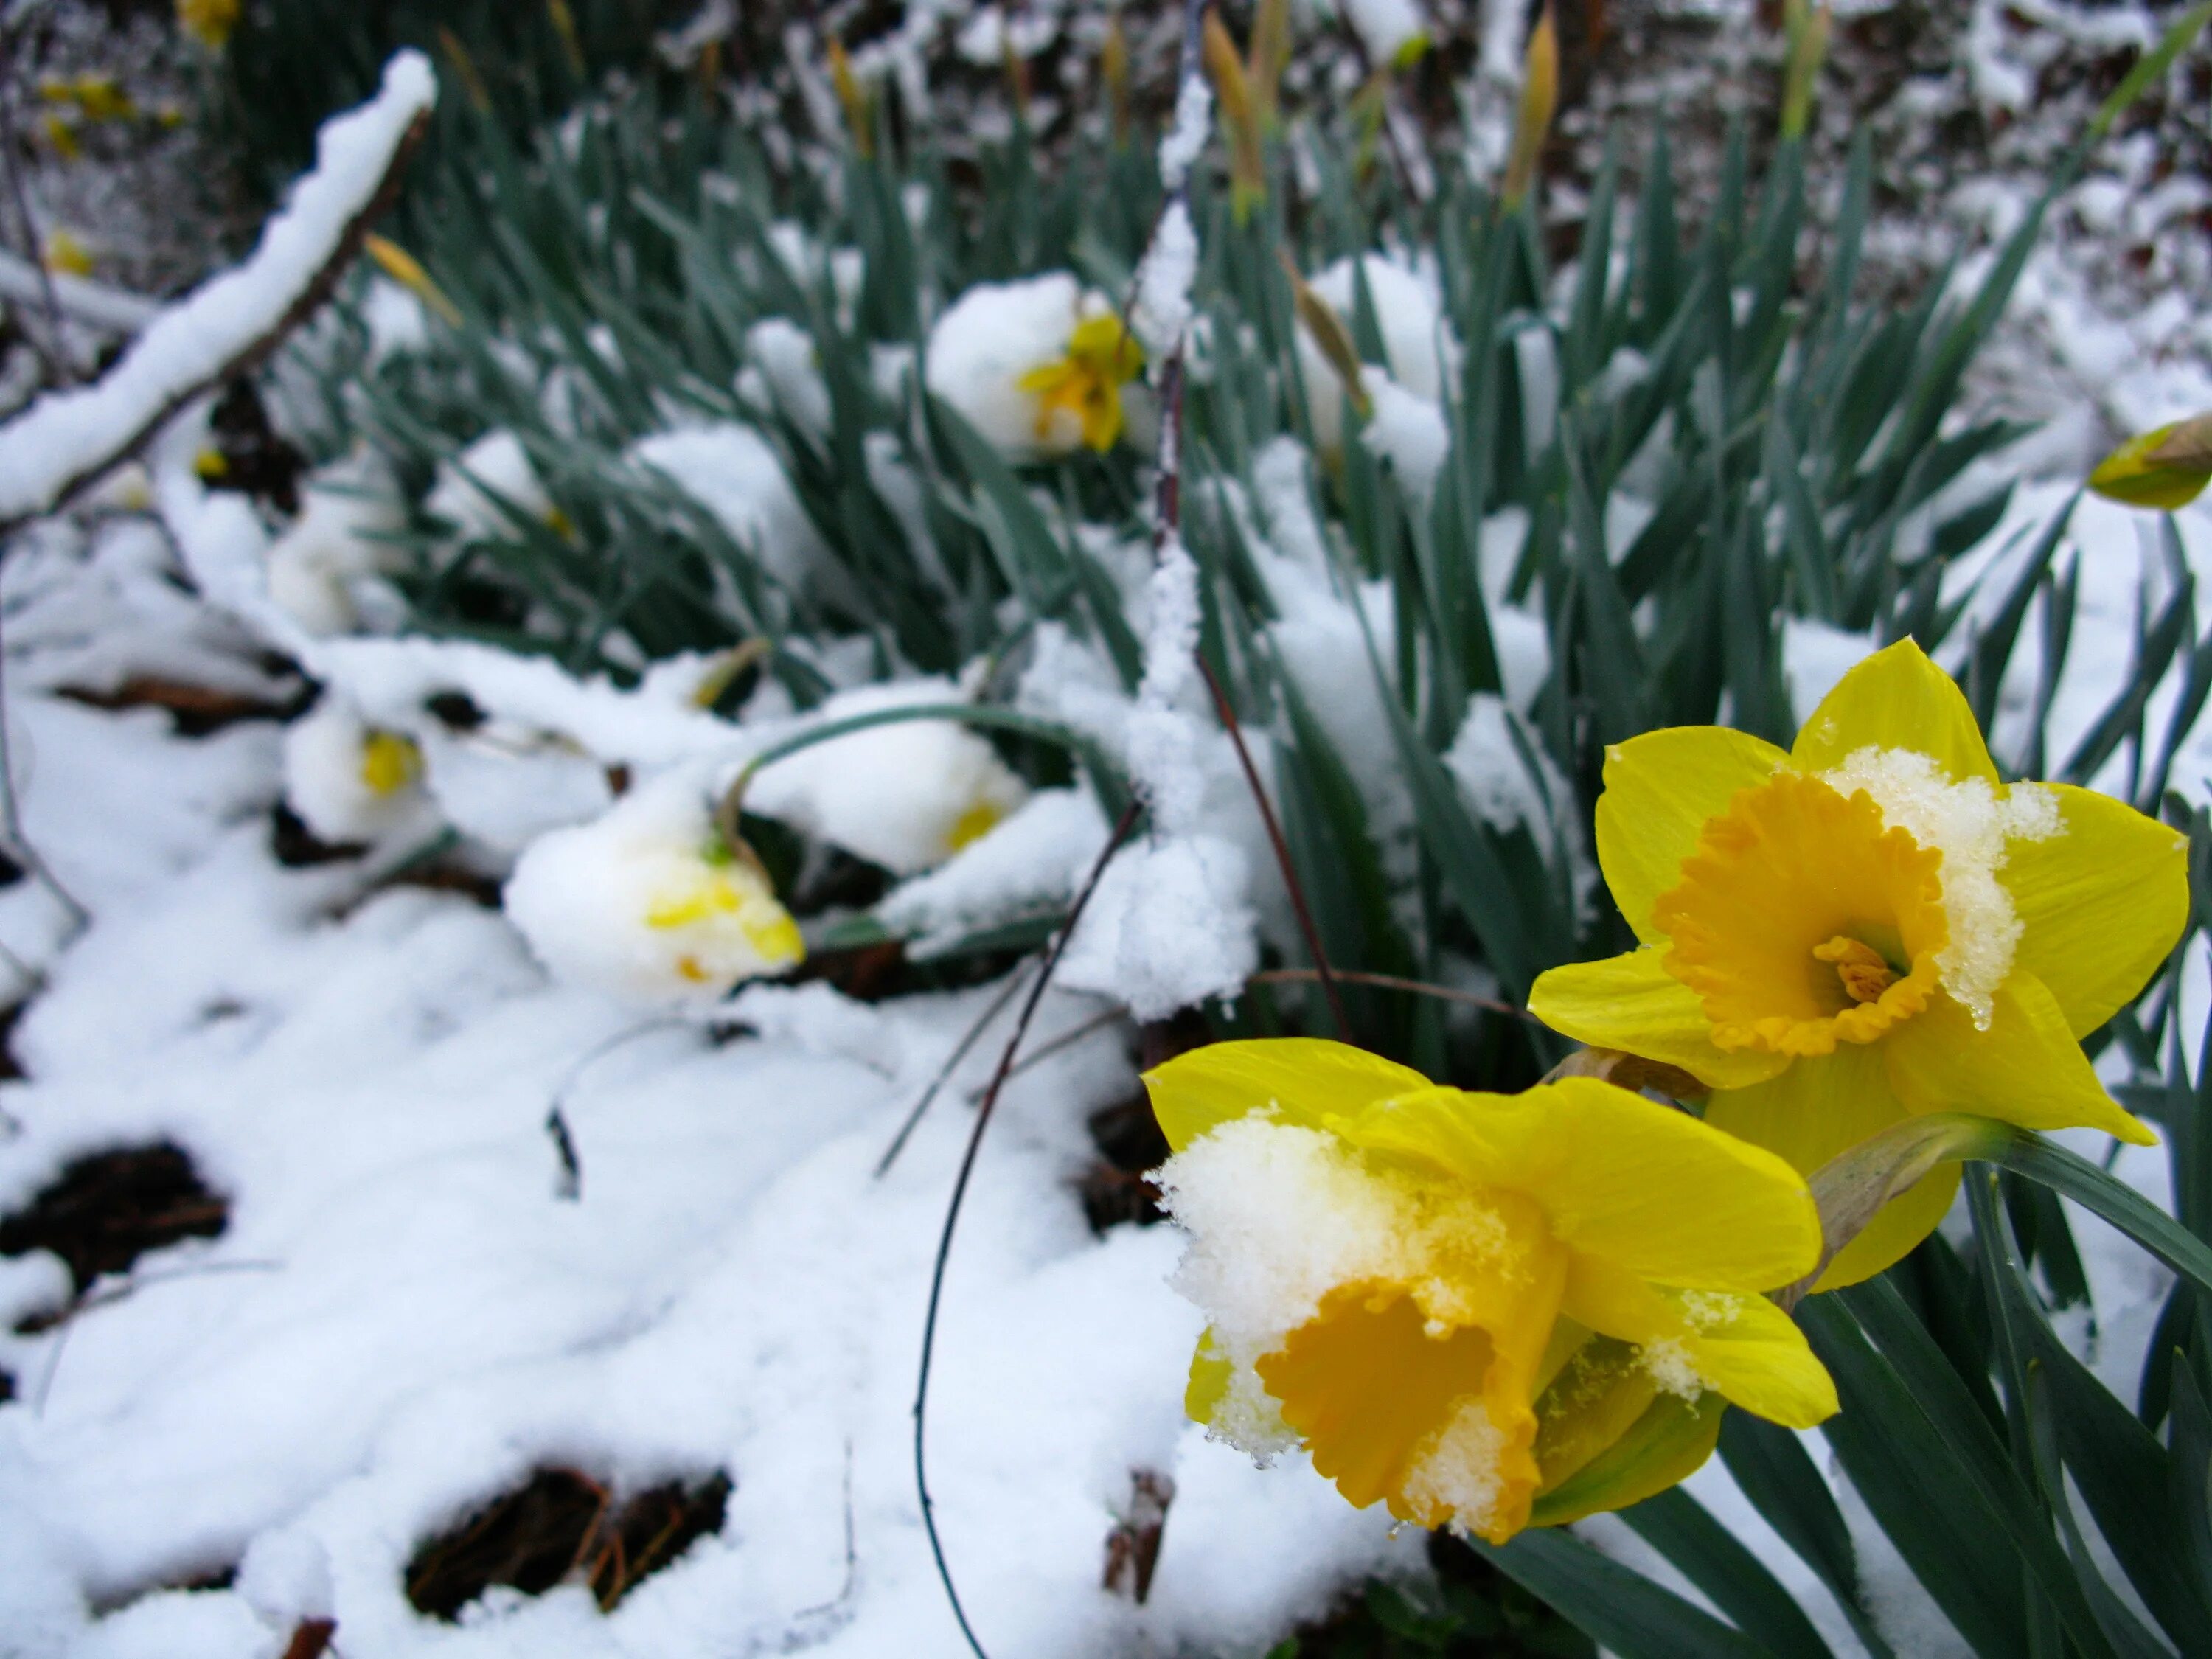 Первоцветы нарциссы. Нарцисс large 'Oregon Snow'. Желтые первоцветы крокусы. Самые первые цветы после зимы